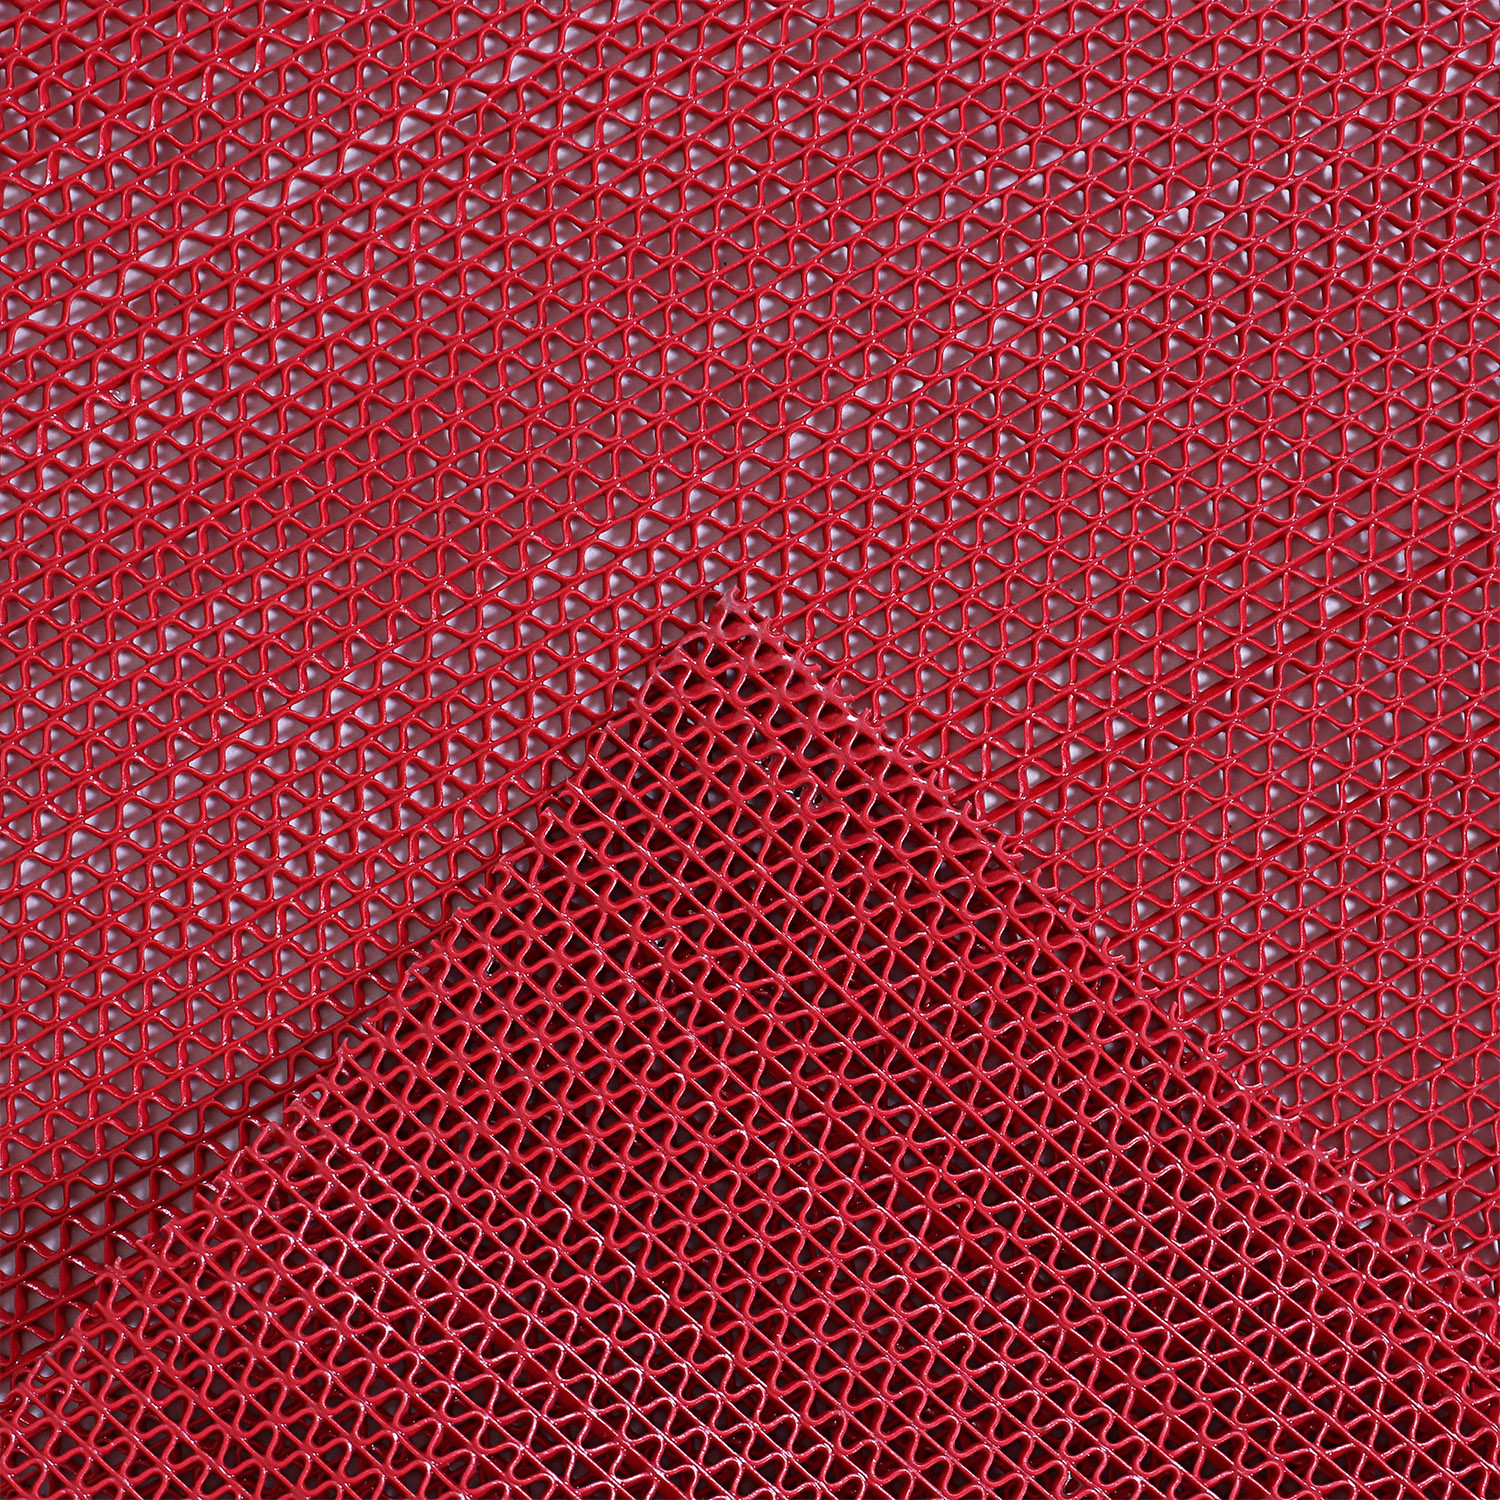 Kuber Industries Rubber Waterproof Anti-Skid Swimming Pool Mat|Shower Mat|Rainmat For Entrance Area,Bathroom,2 x 5 Feet (Red)